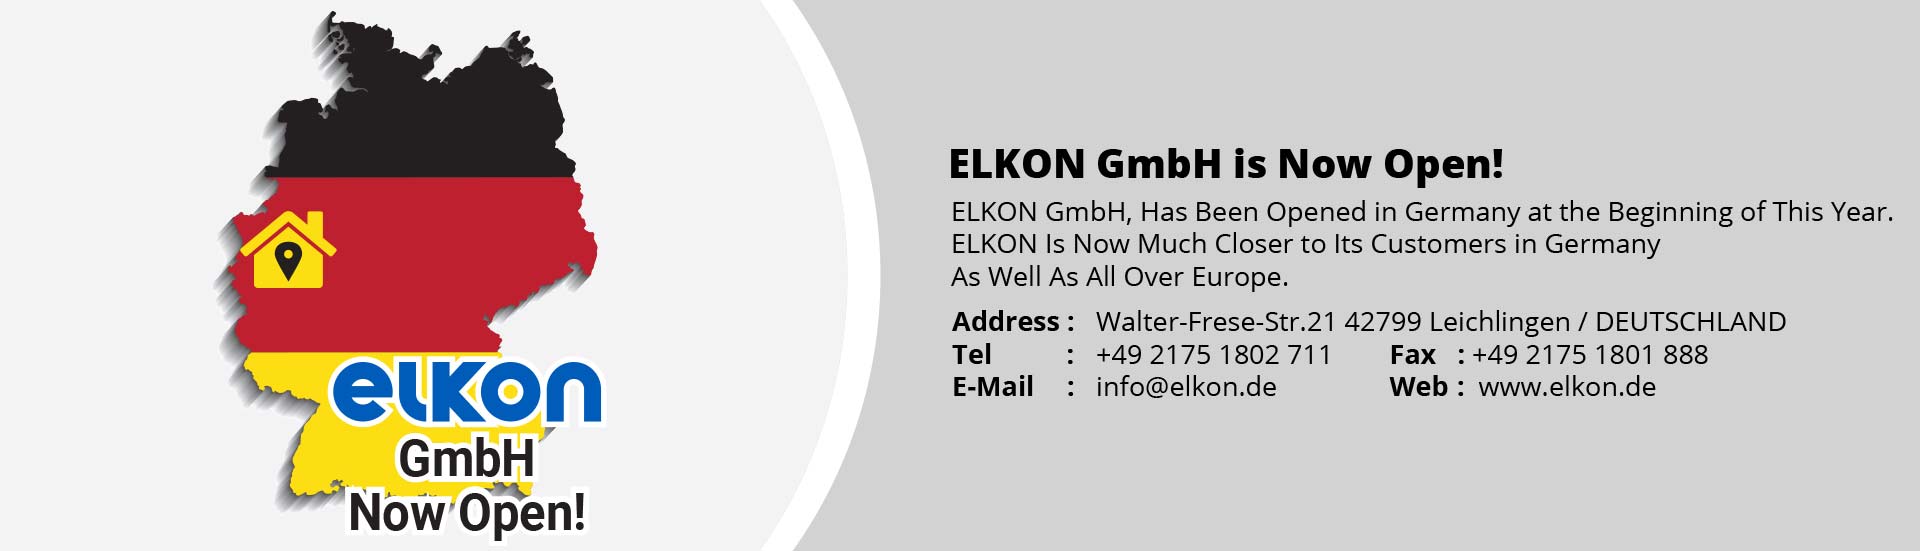 ELKON GmbH is Now Open!